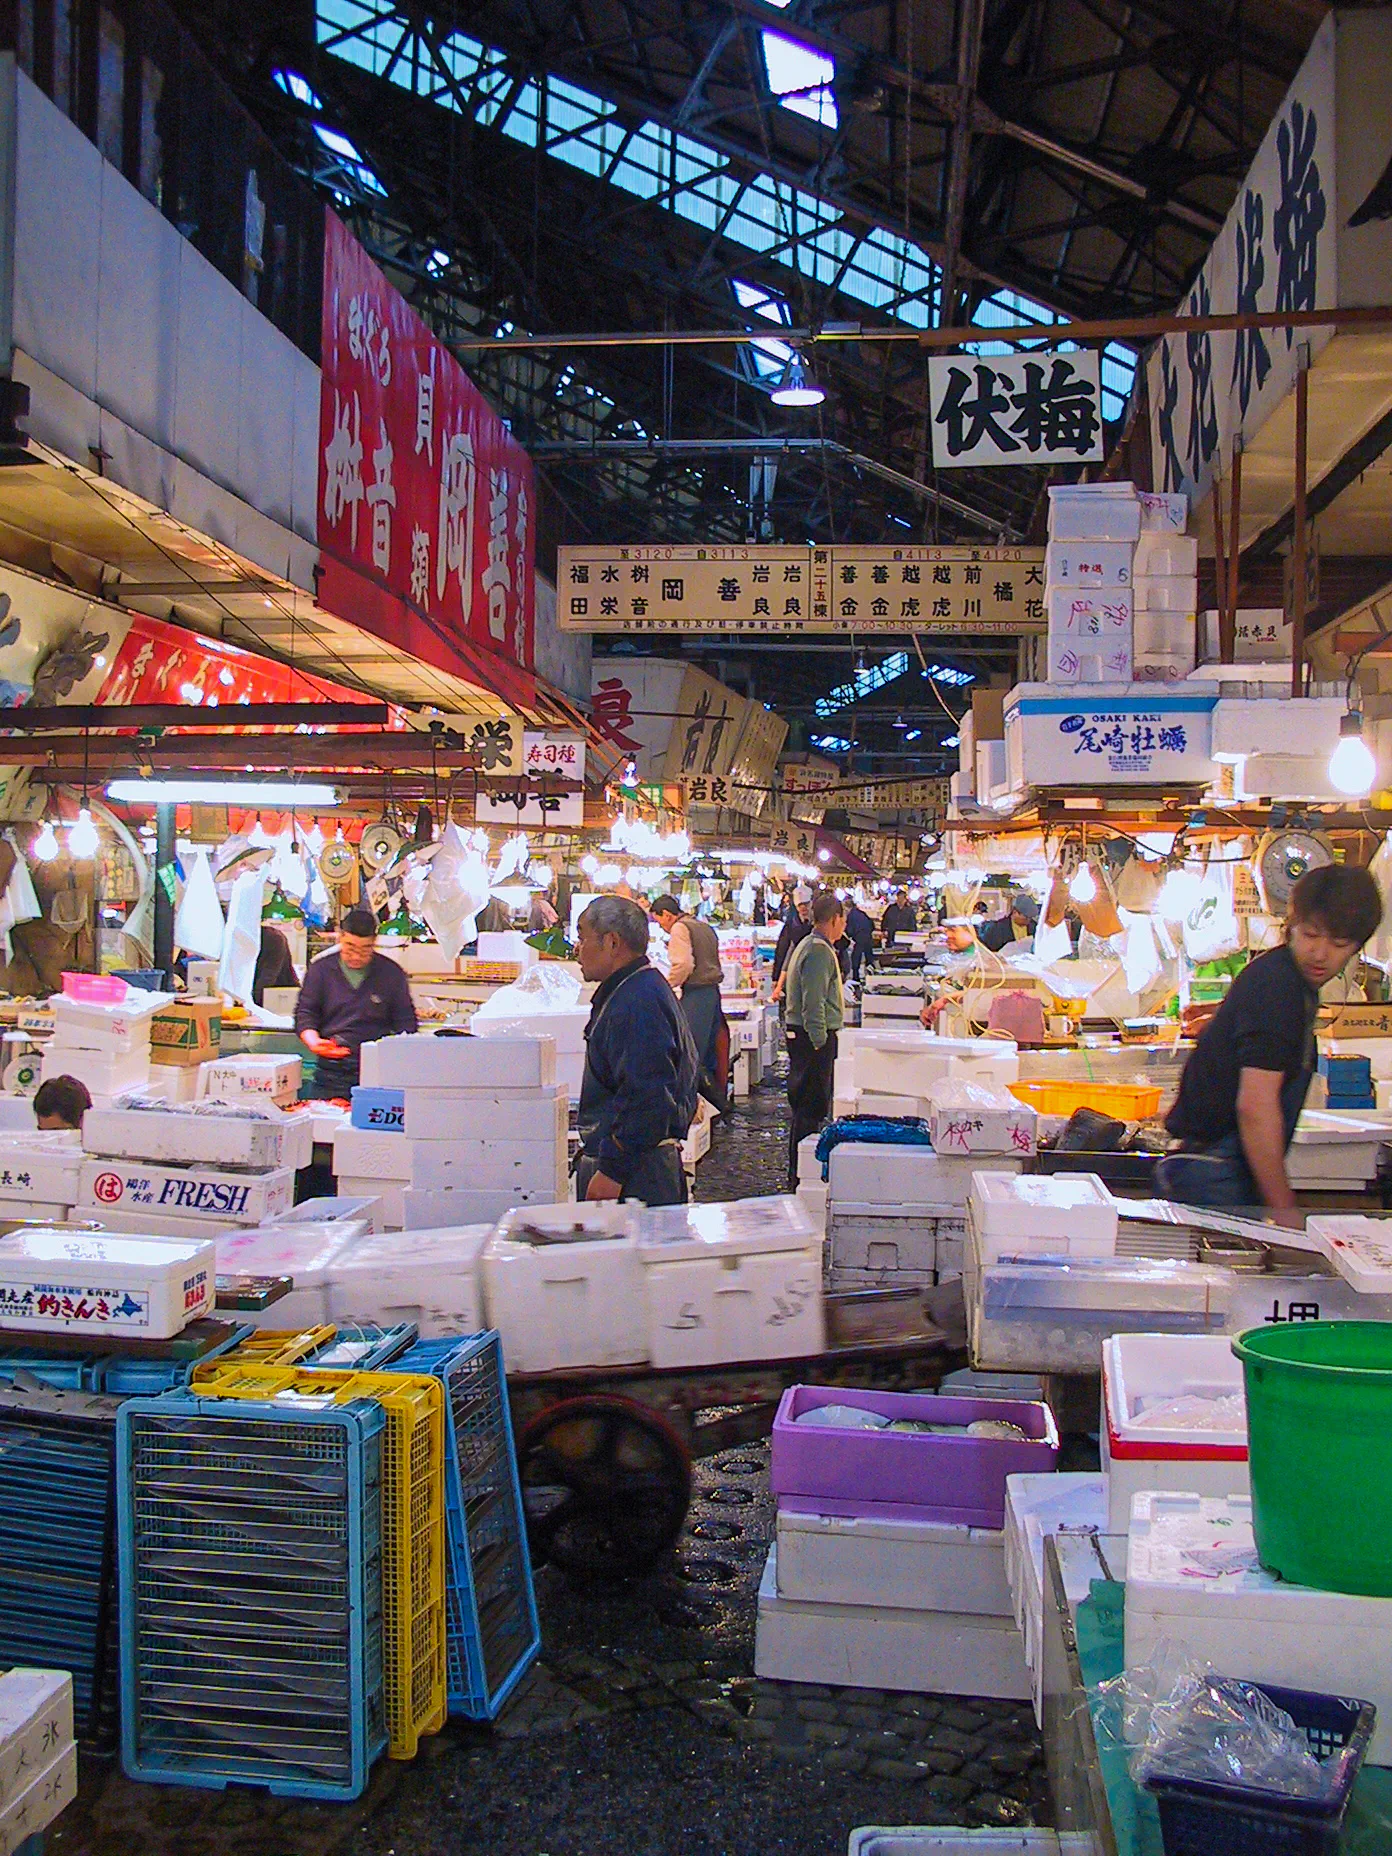 Activity in Tsukiji Market